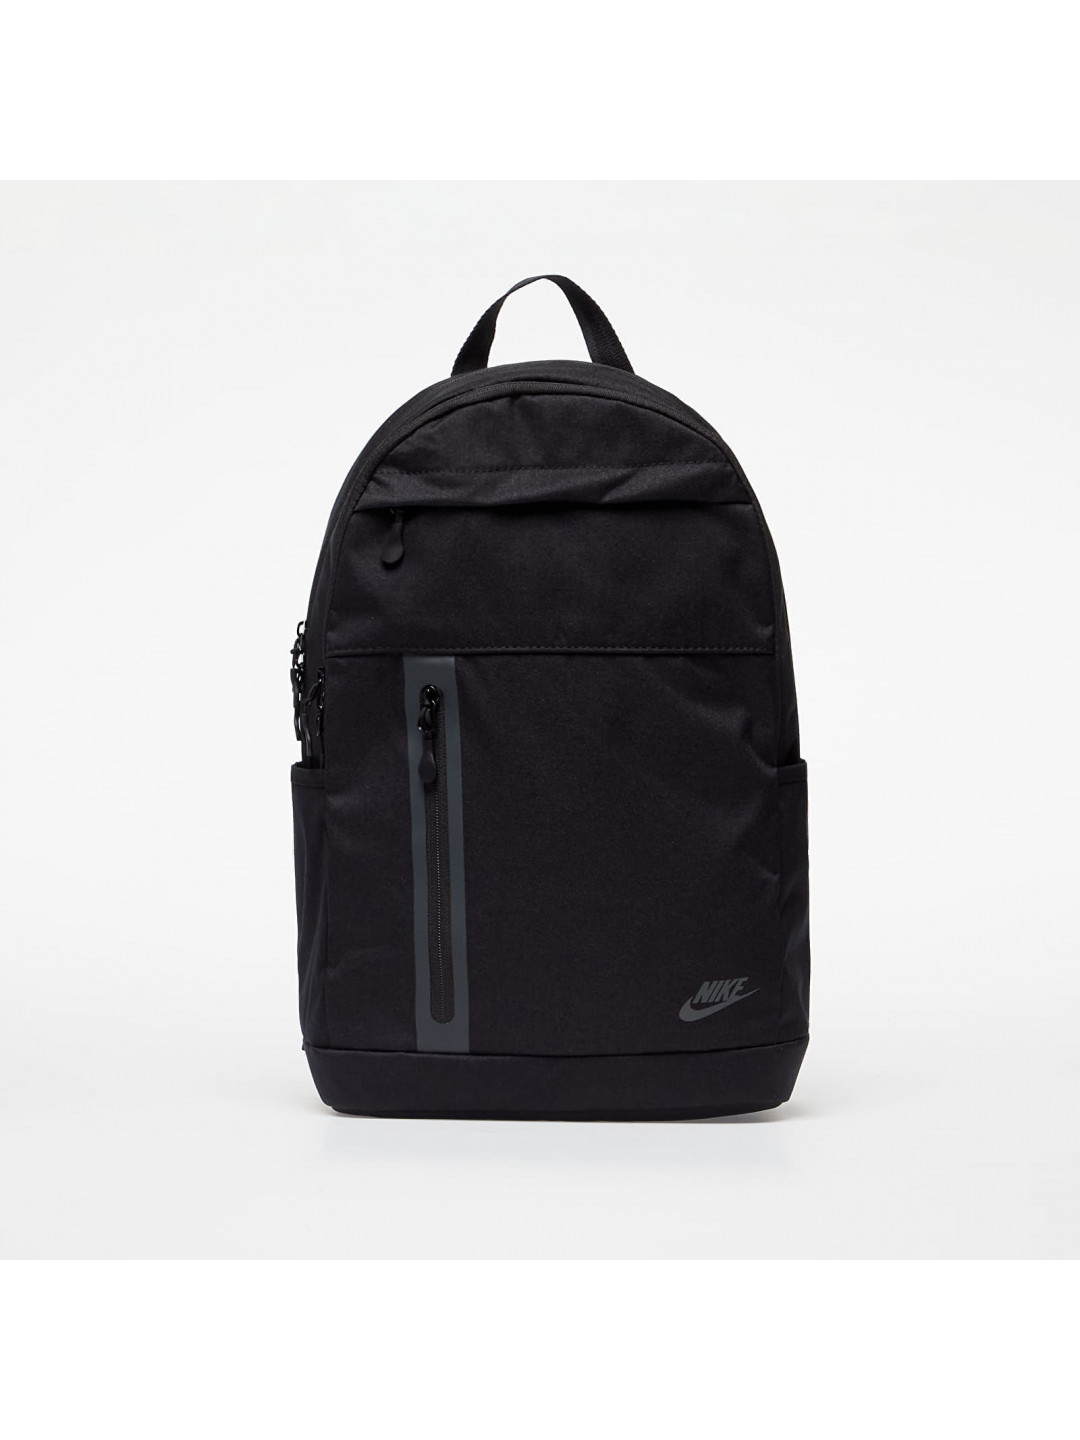 Nike Elemental Premium Backpack Black Black Anthracite